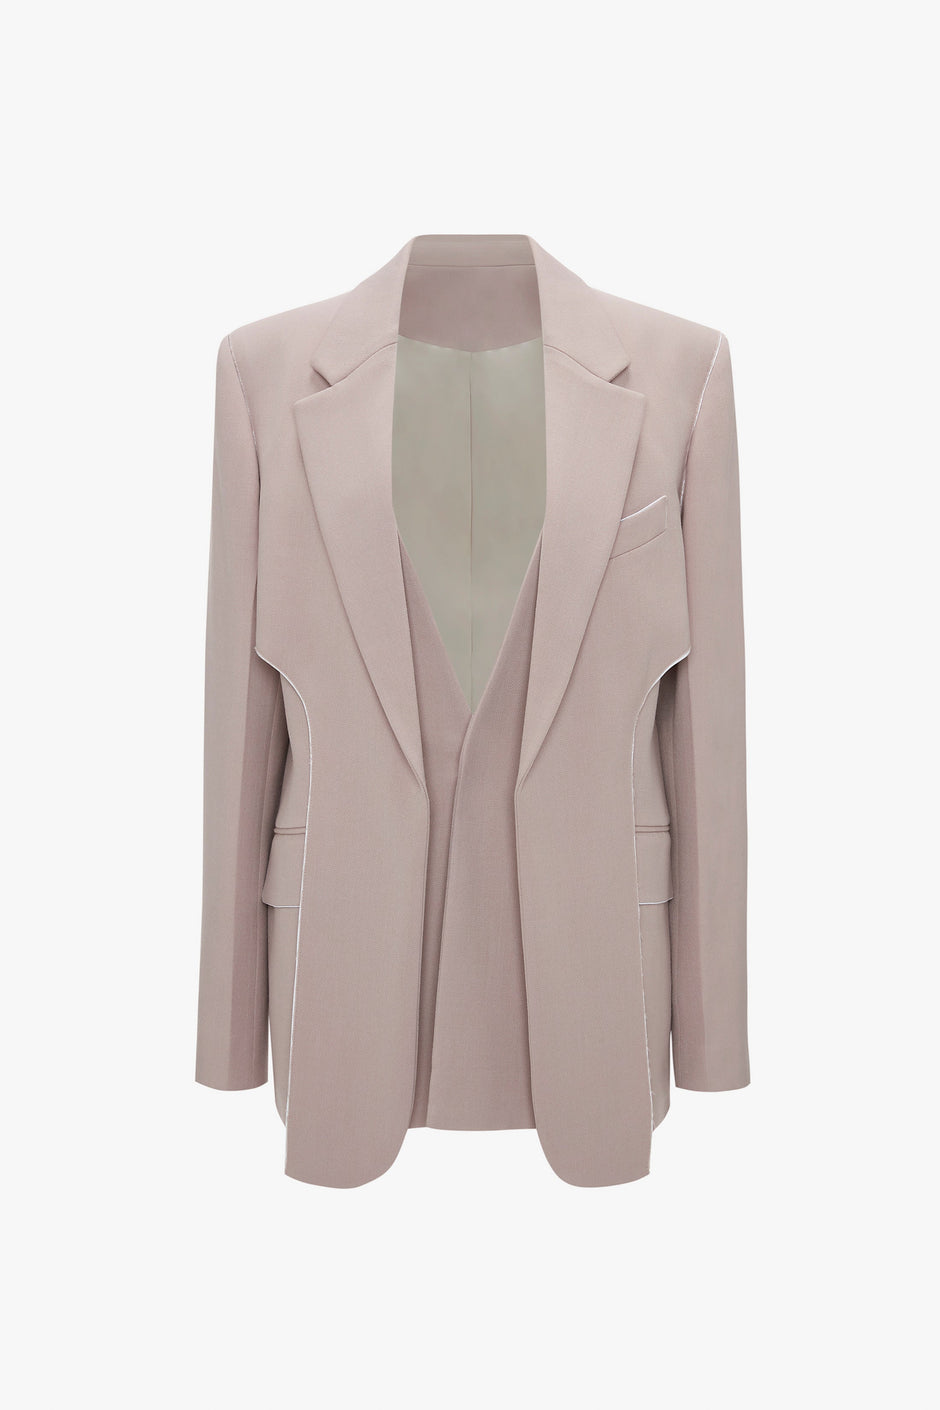 Designer Women's Coats & Jackets Collection – Victoria Beckham